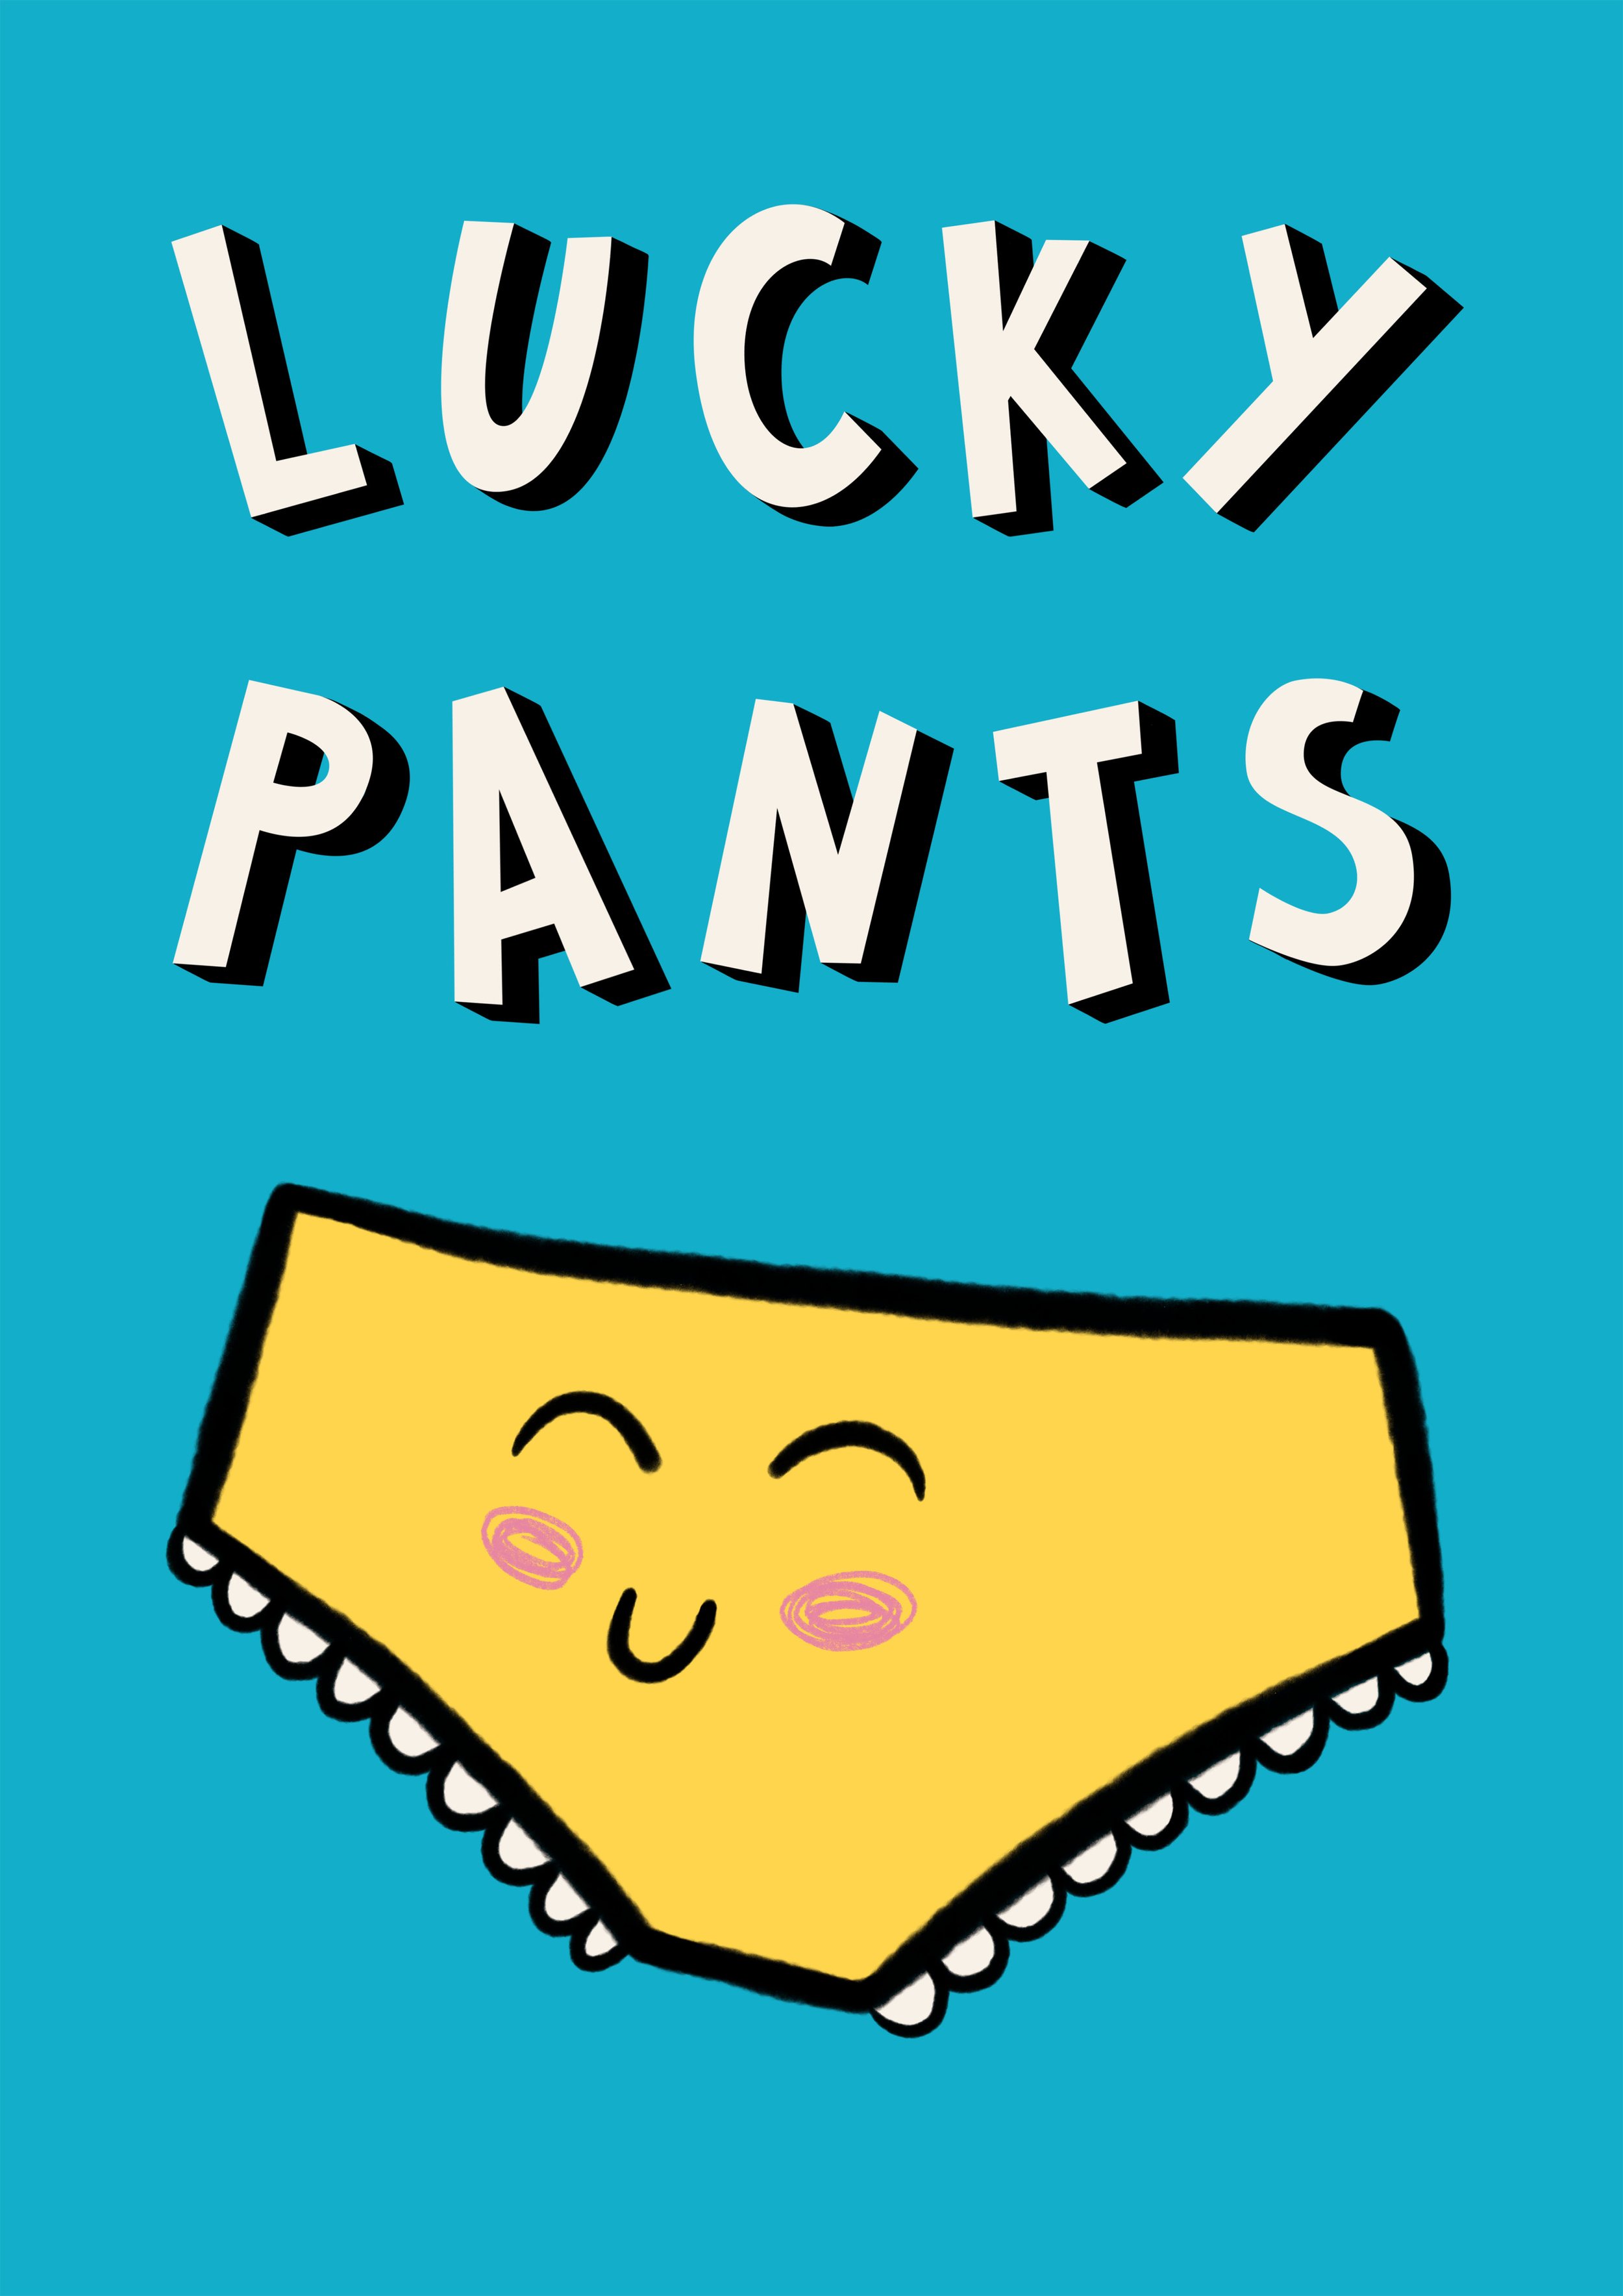 Lucky Pants